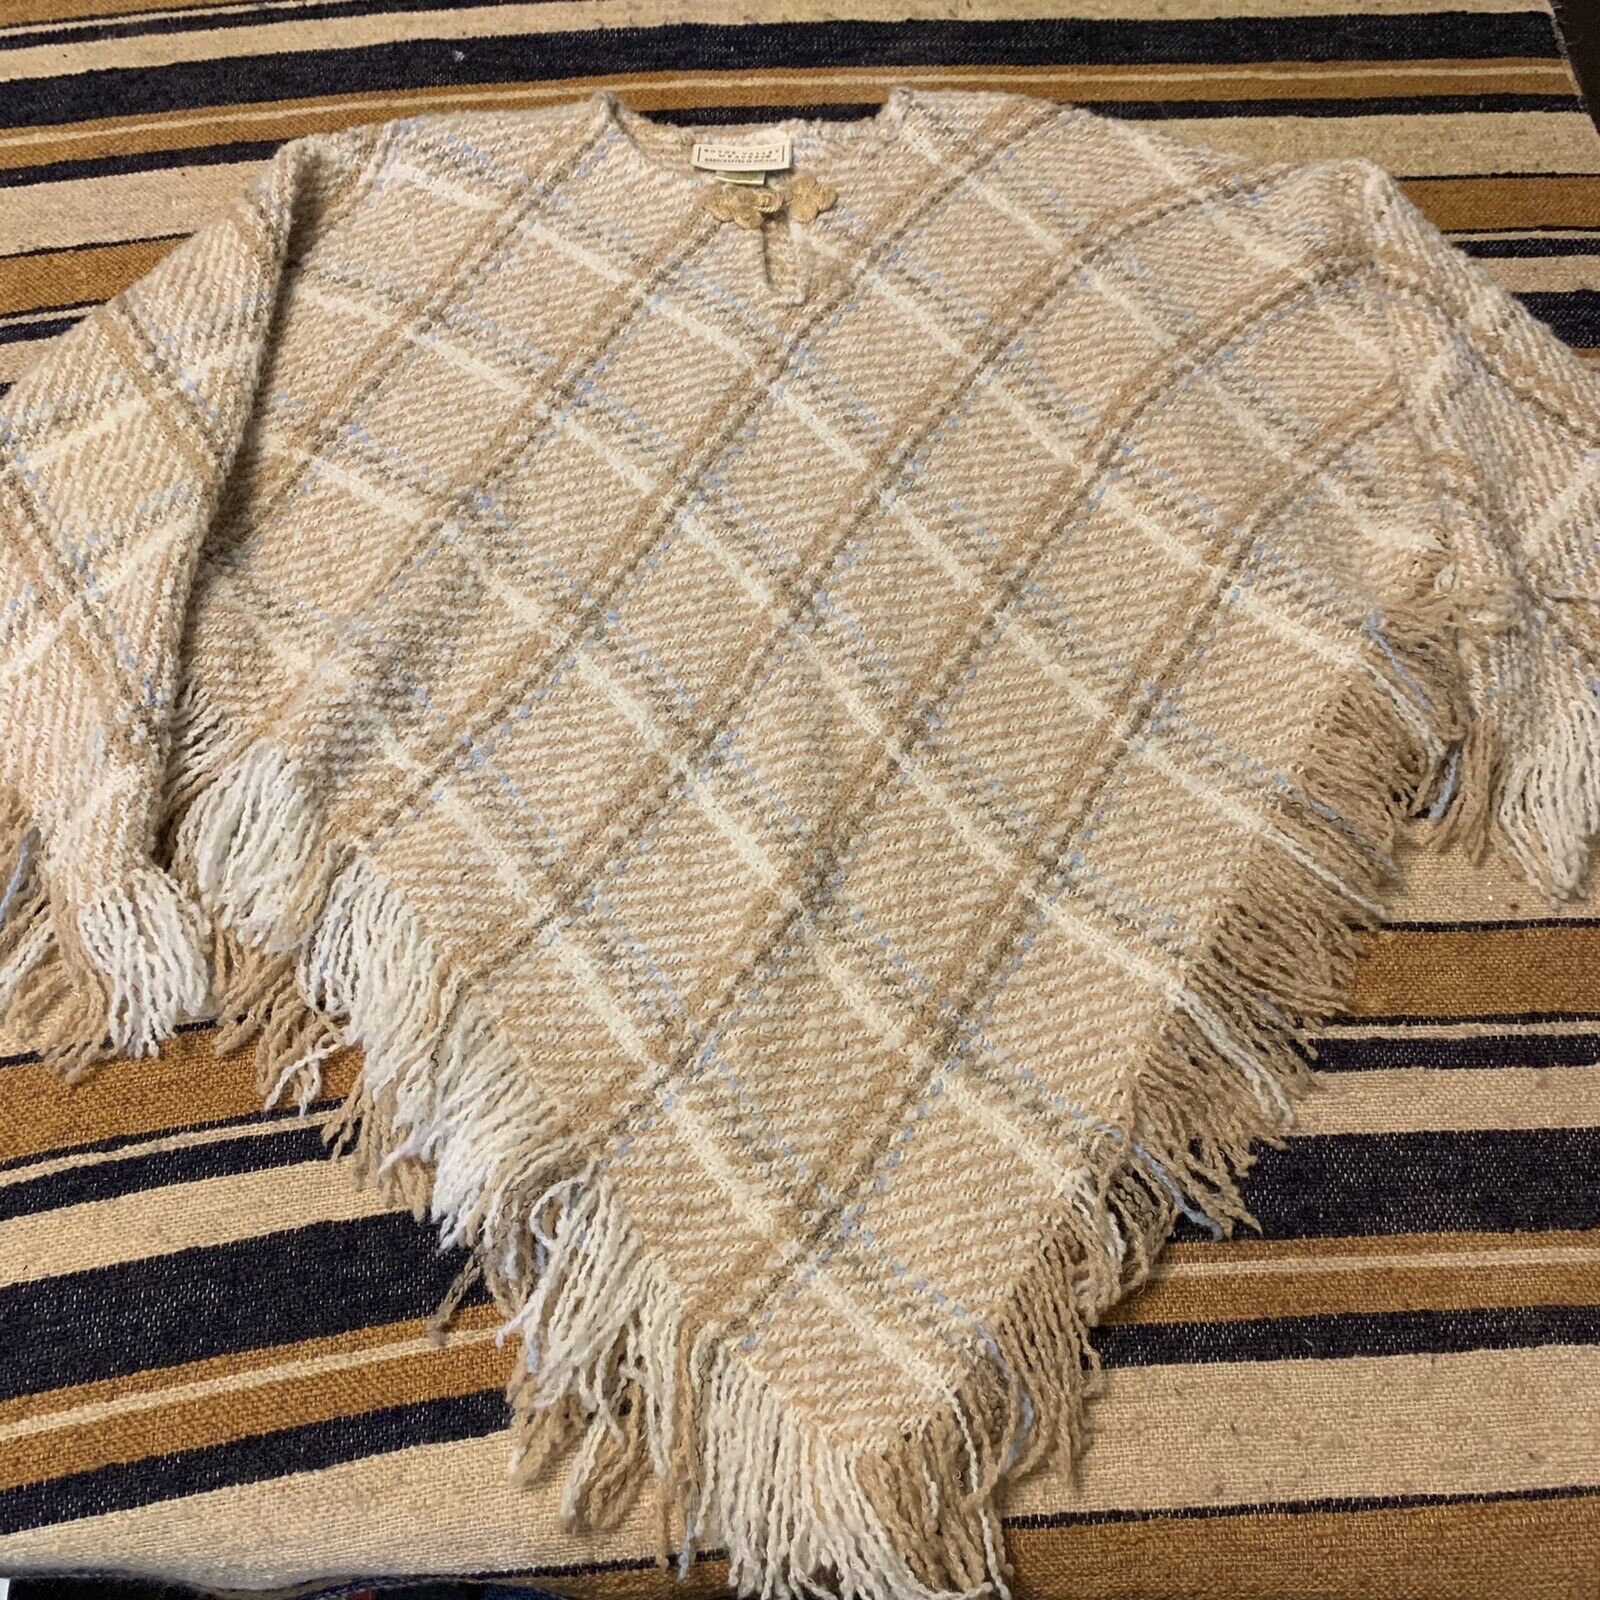 Boyne Valley Weavers Poncho Cape Woven Tan Fringe Handcrafted Ireland Wool Blend